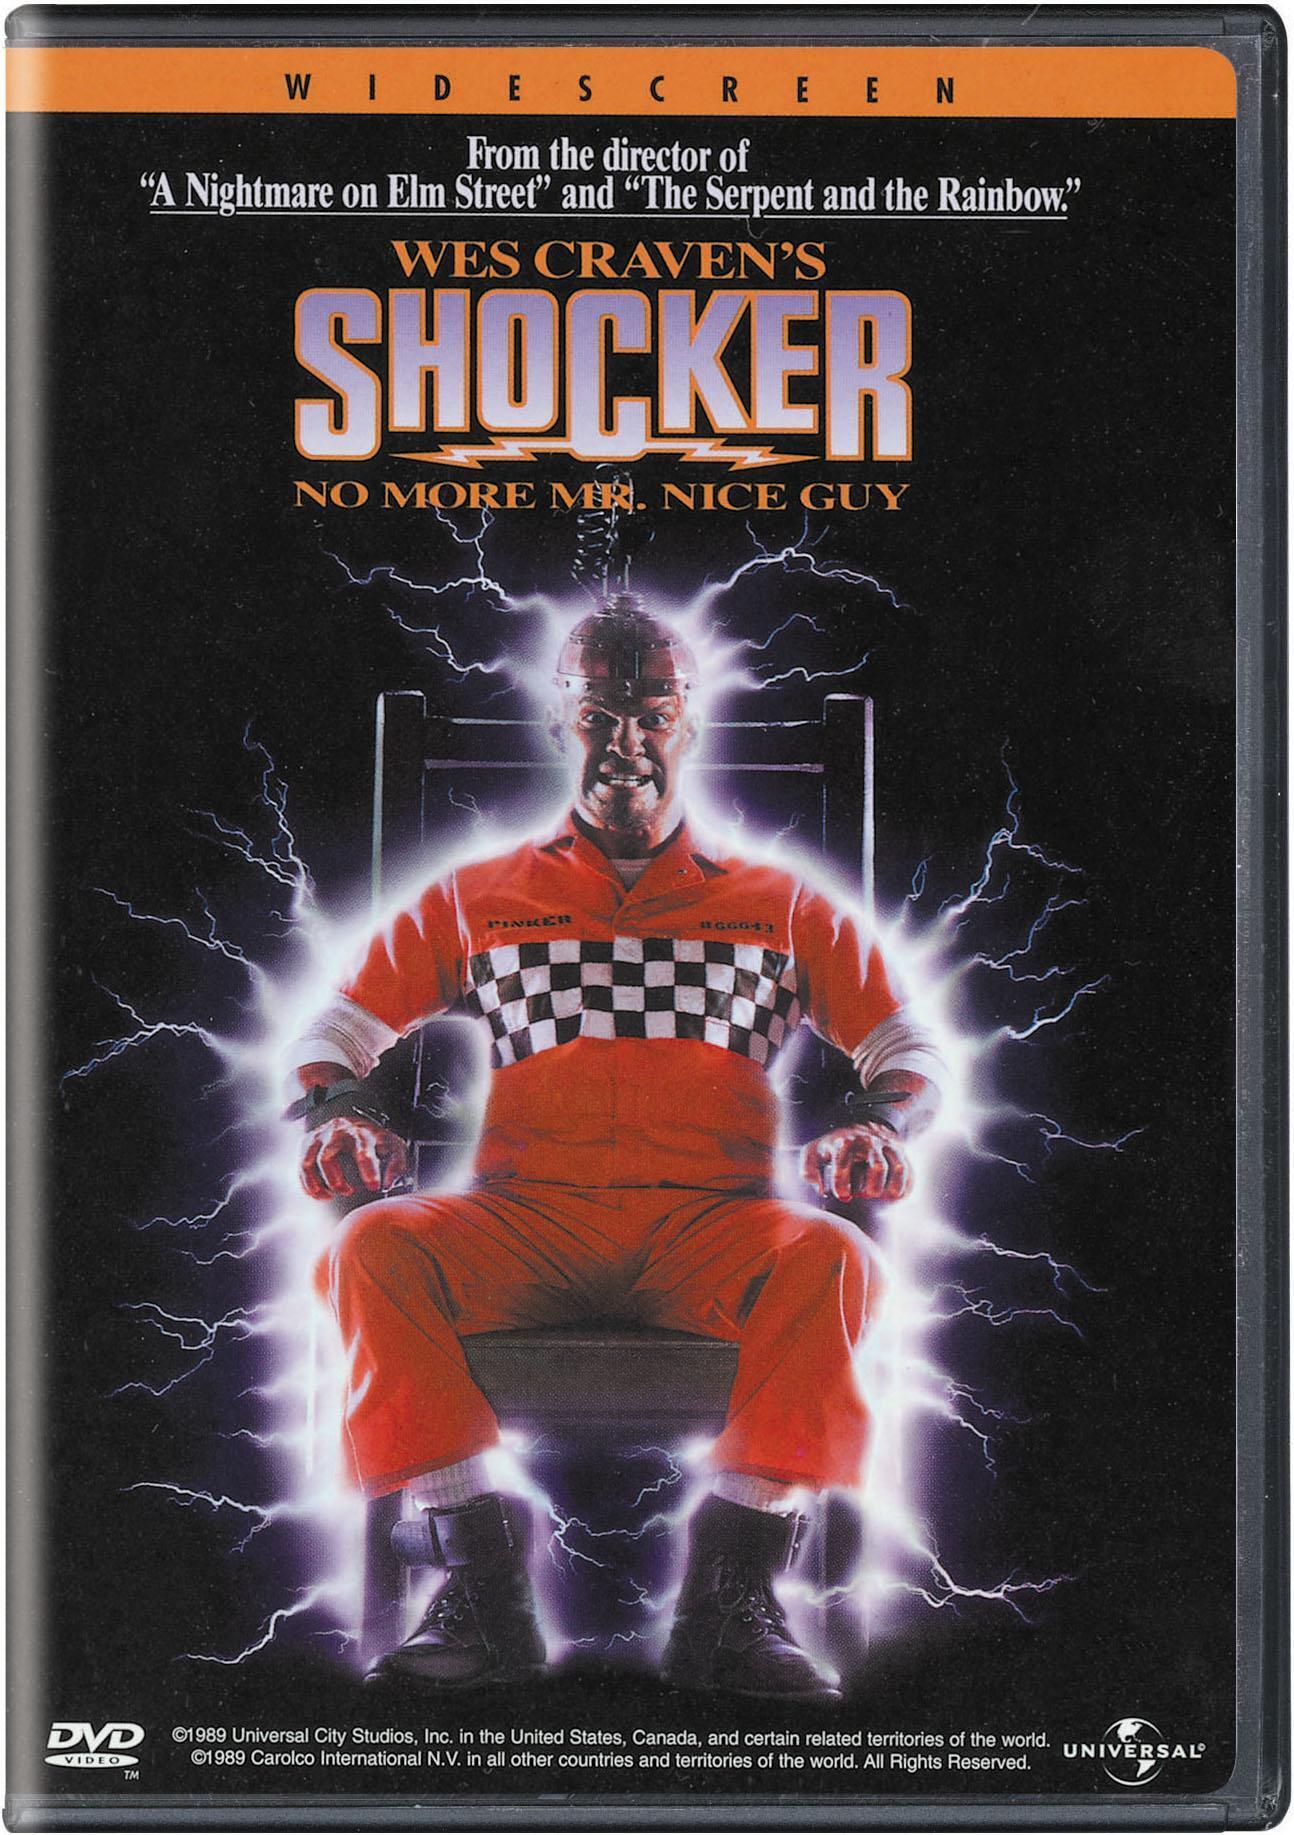 Shocker - DVD [ 1989 ]  - Horror Movies On DVD - Movies On GRUV